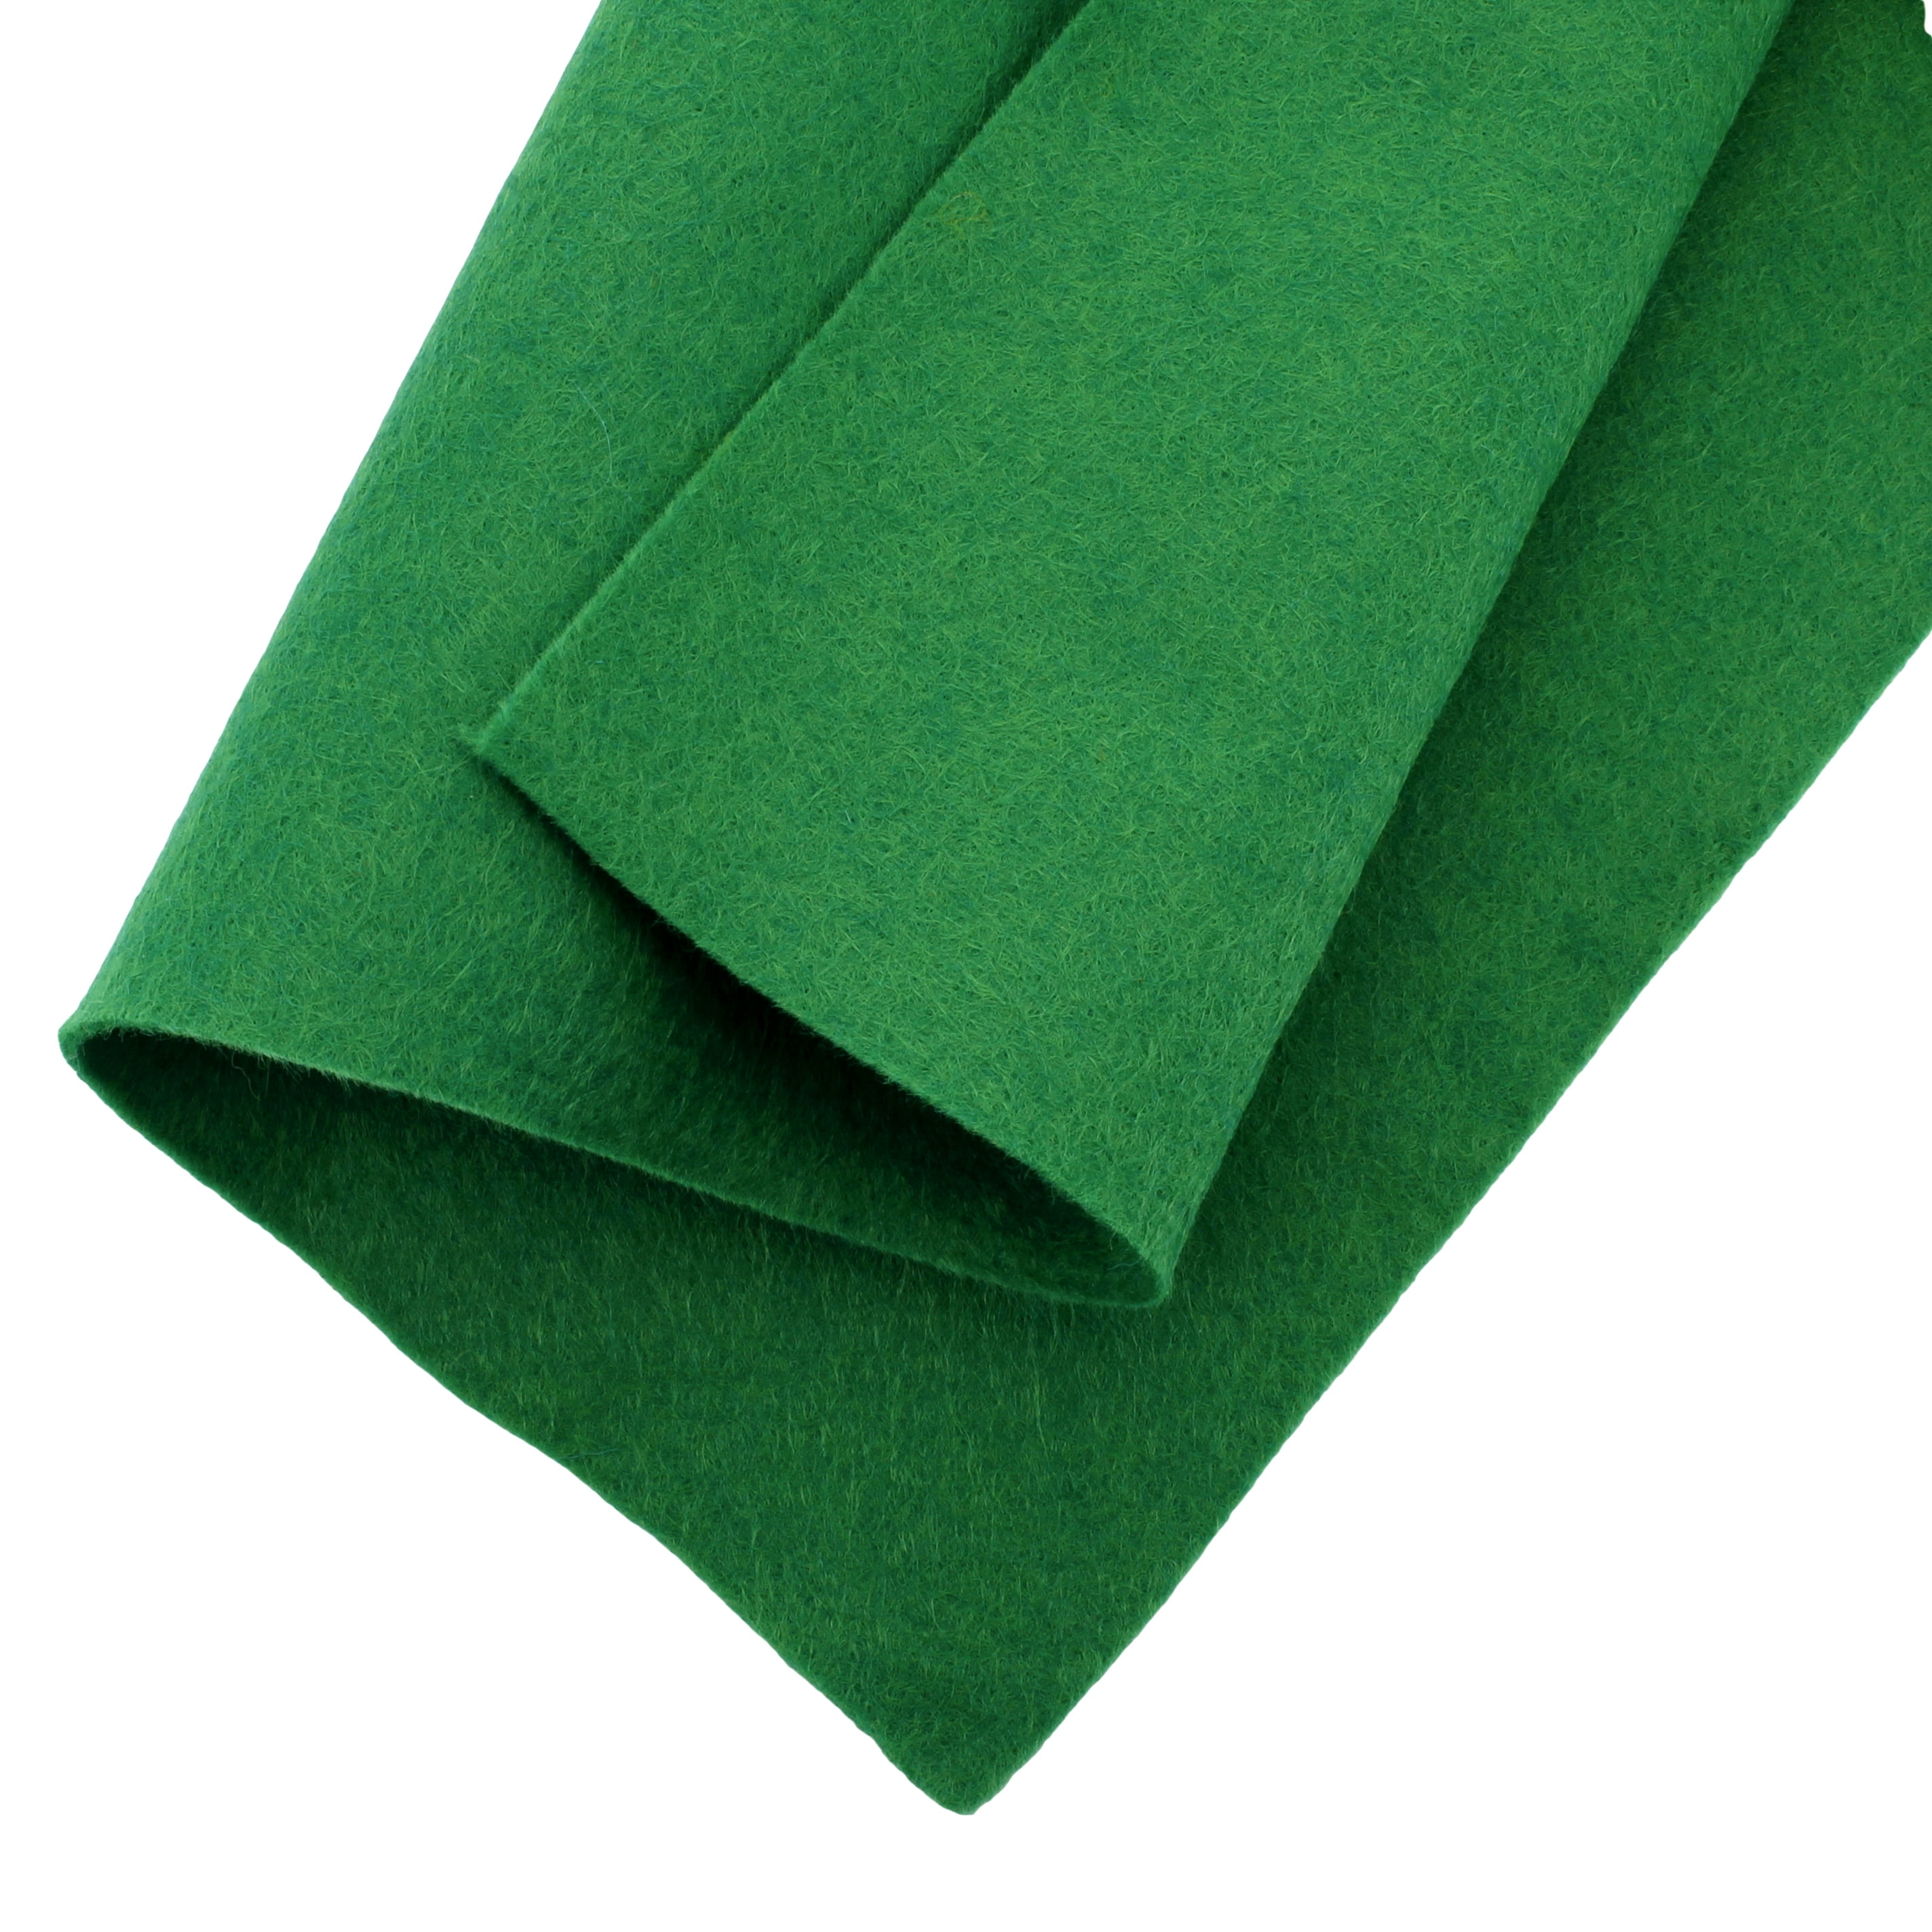 Merino Wool Blend Felt Crafting Sheets ( 8 5/8 x 11 5/8) - Hunter Green 